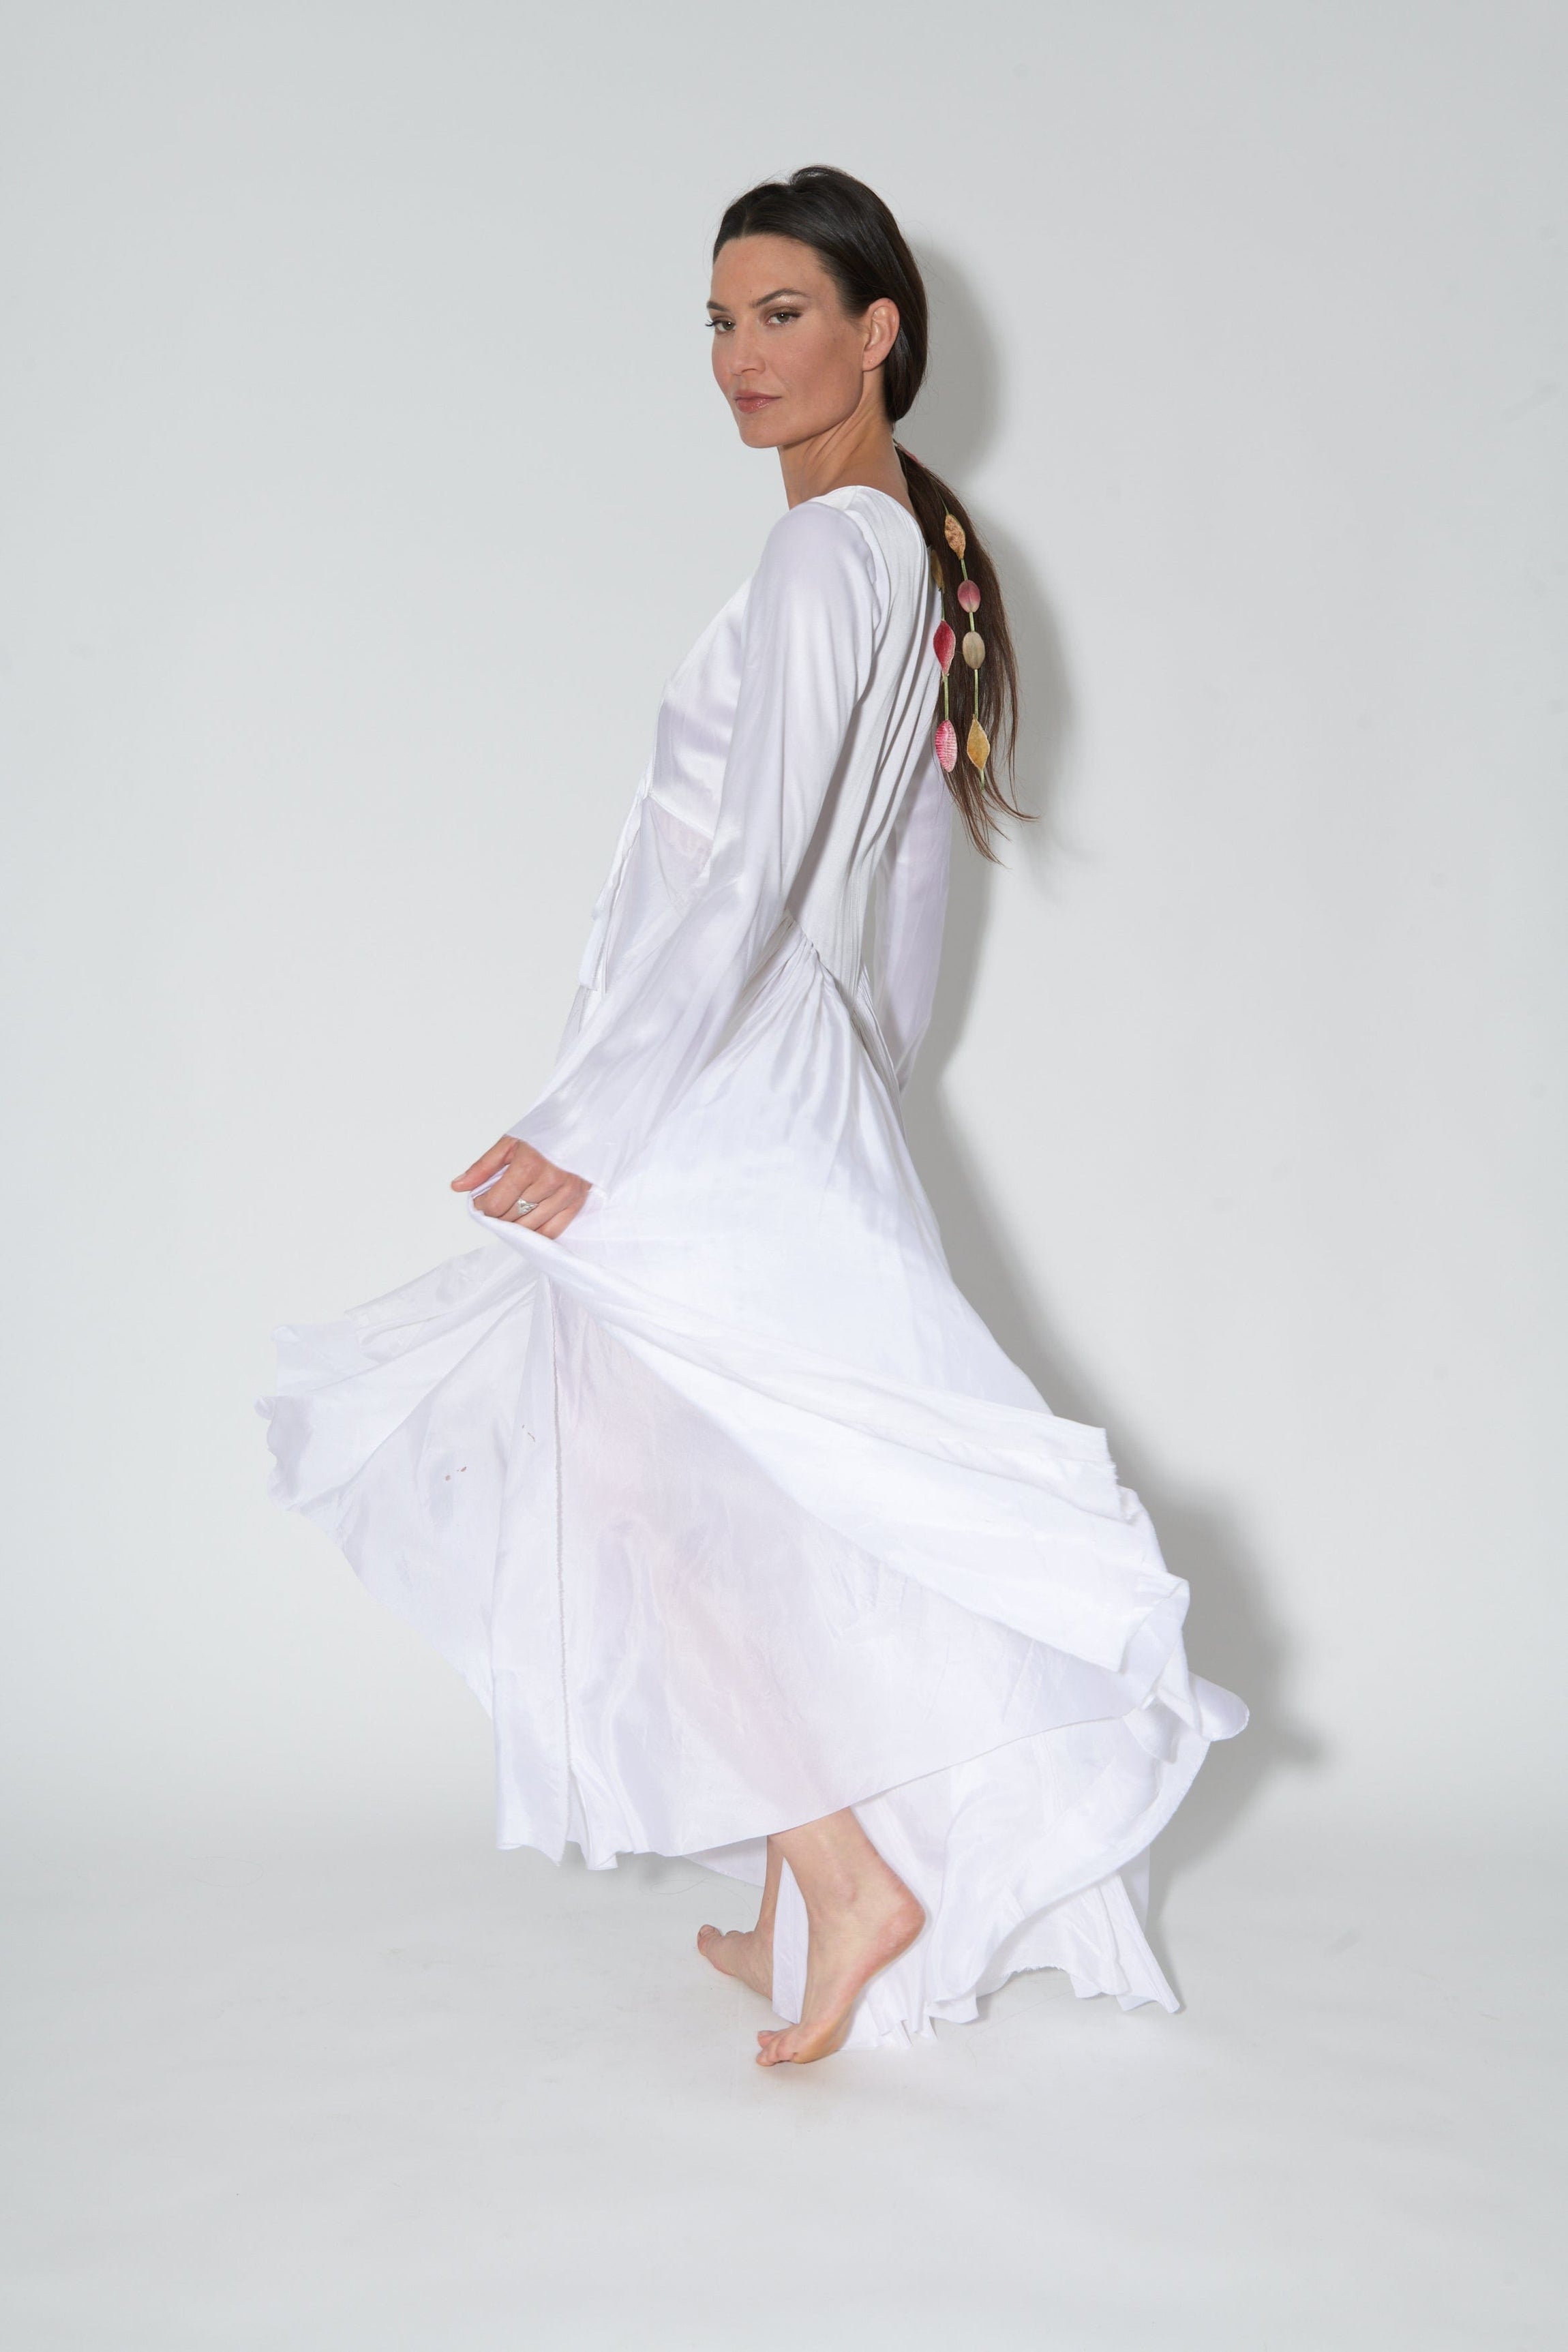 JaneBooke Dresses Special K Dress in White